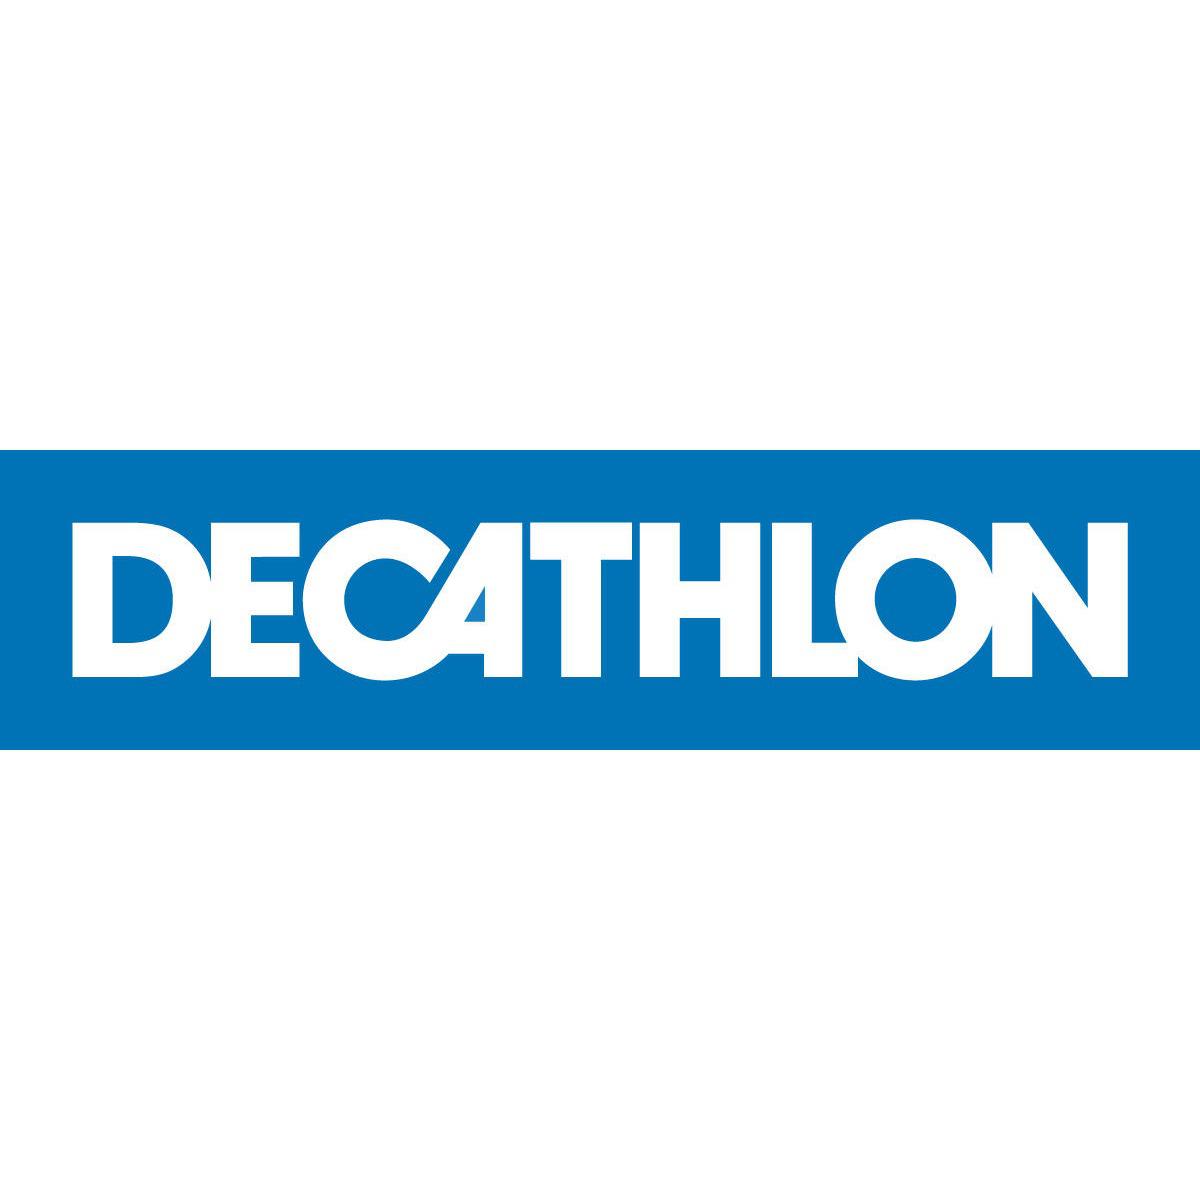 DECATHLON in Köln - Logo